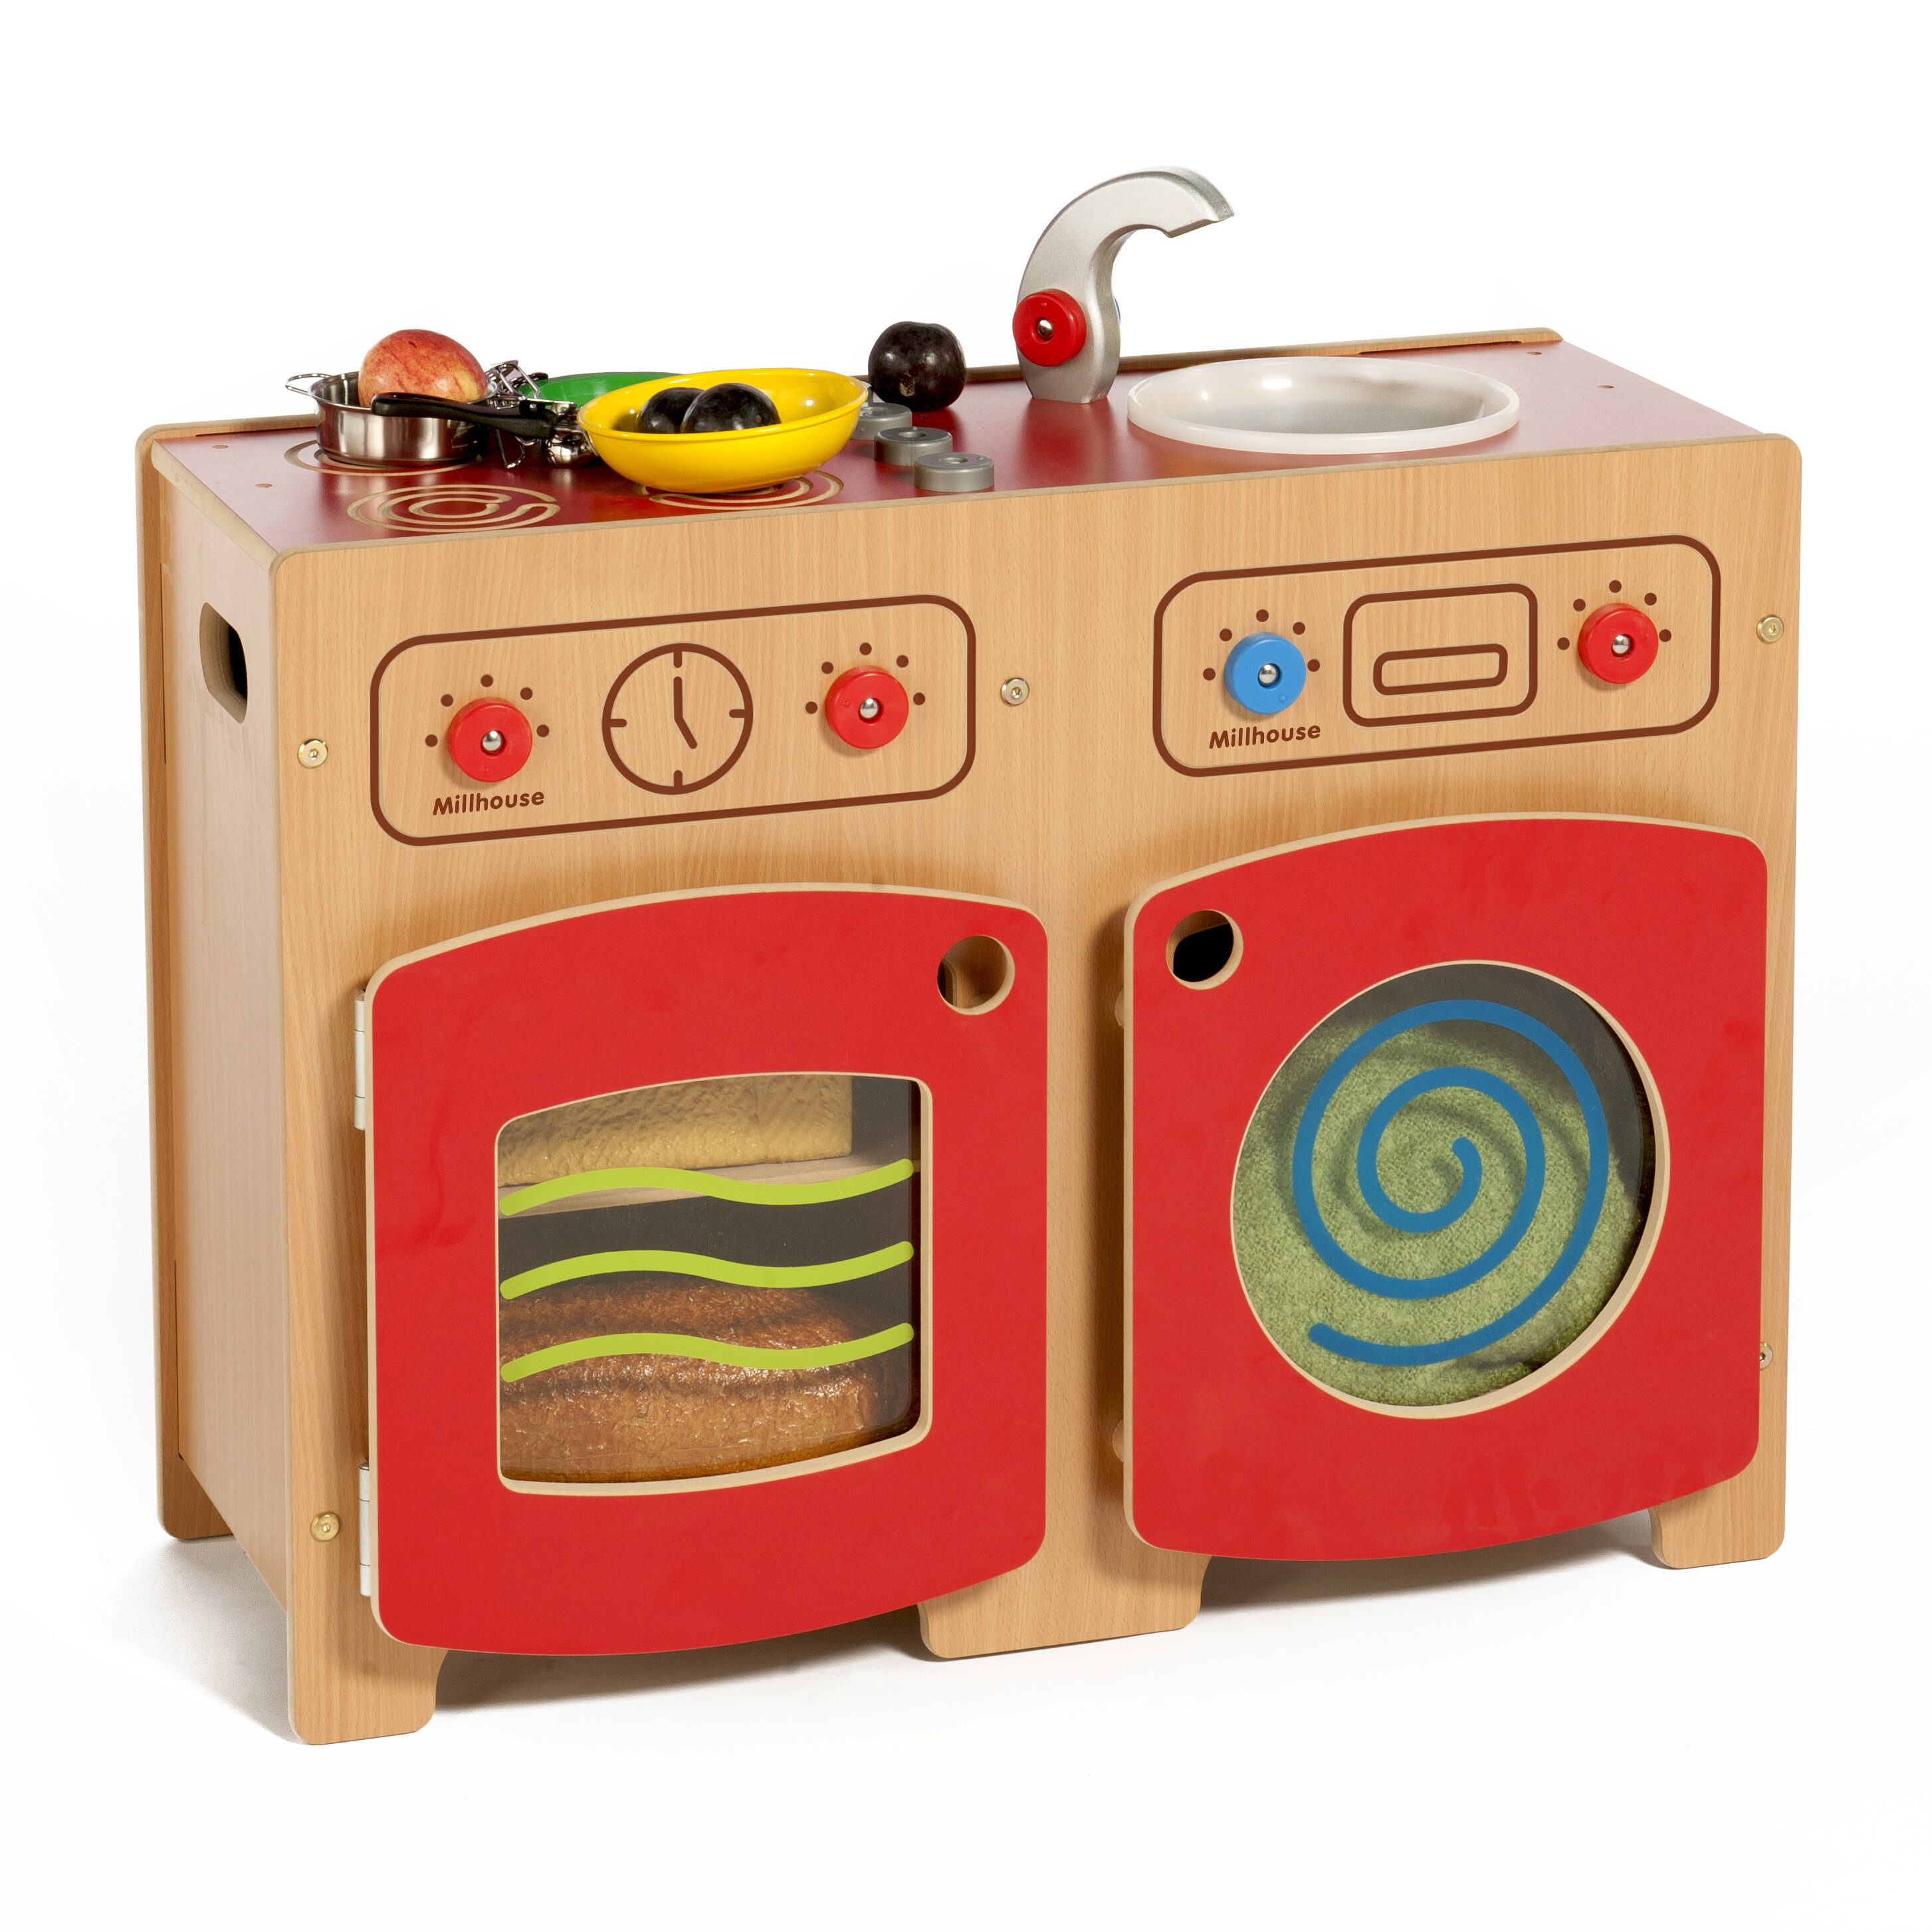 modular kitchen set toy